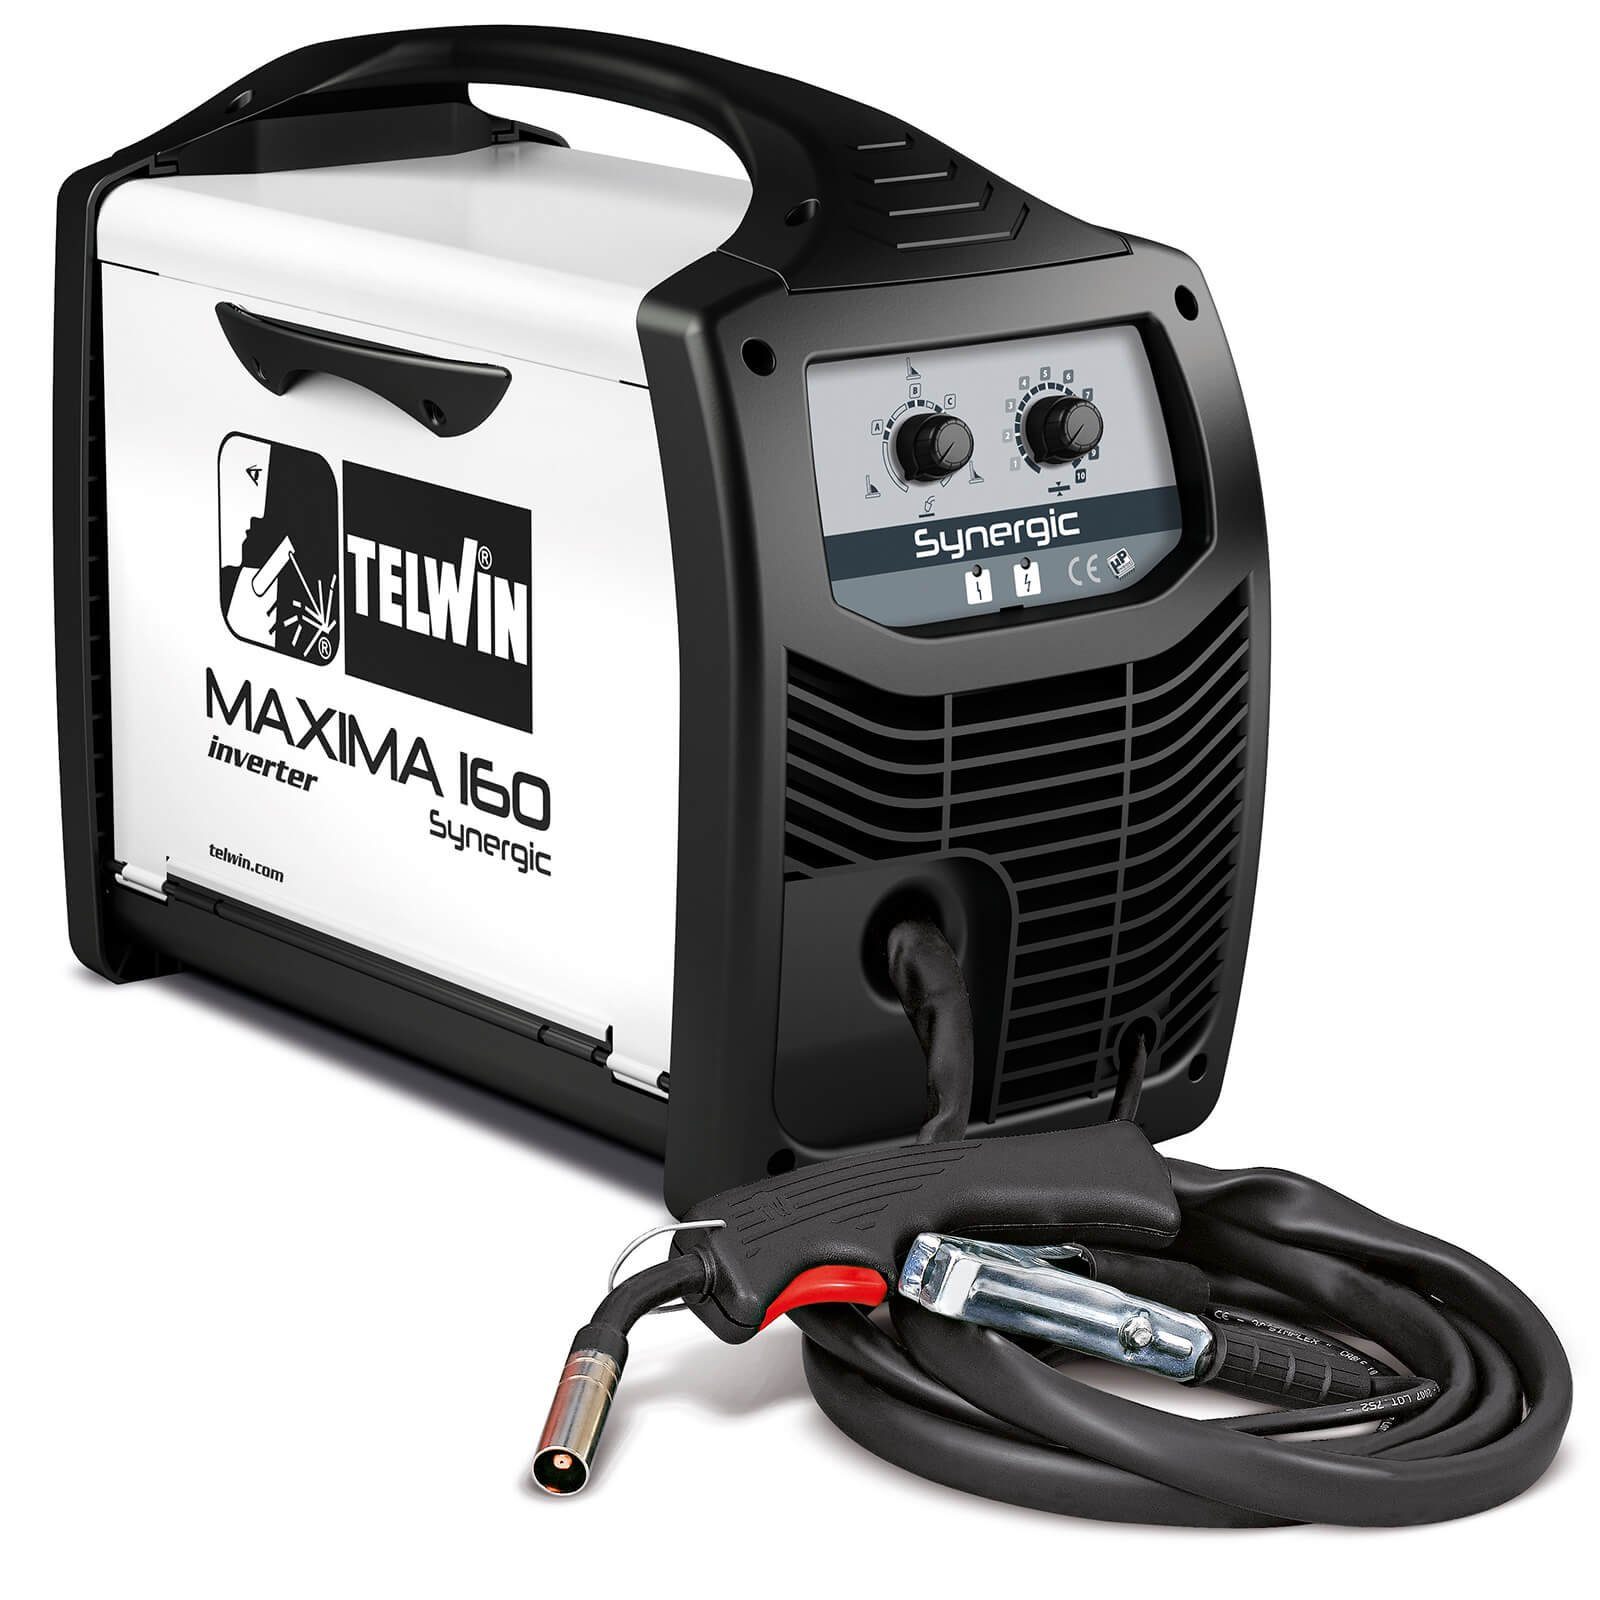 TELWIN Elektroschweißgerät Telwin Elements MAXIMA 160 SYNERGIC Schutzgas Schweißgerät 150A